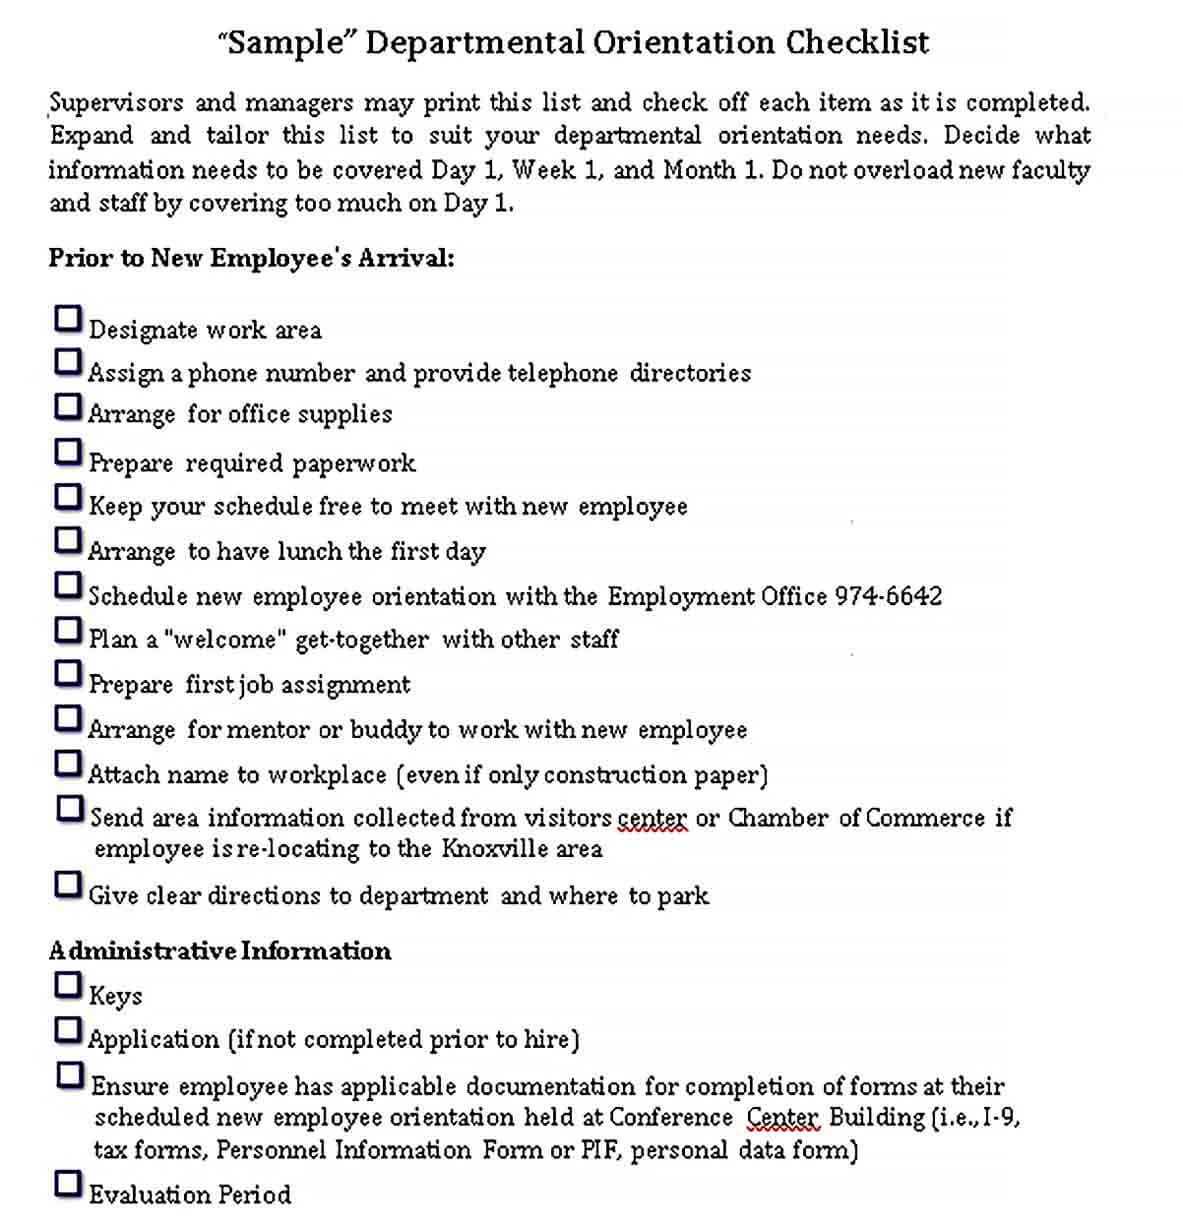 Sample Departmental Orientation Checklist Template